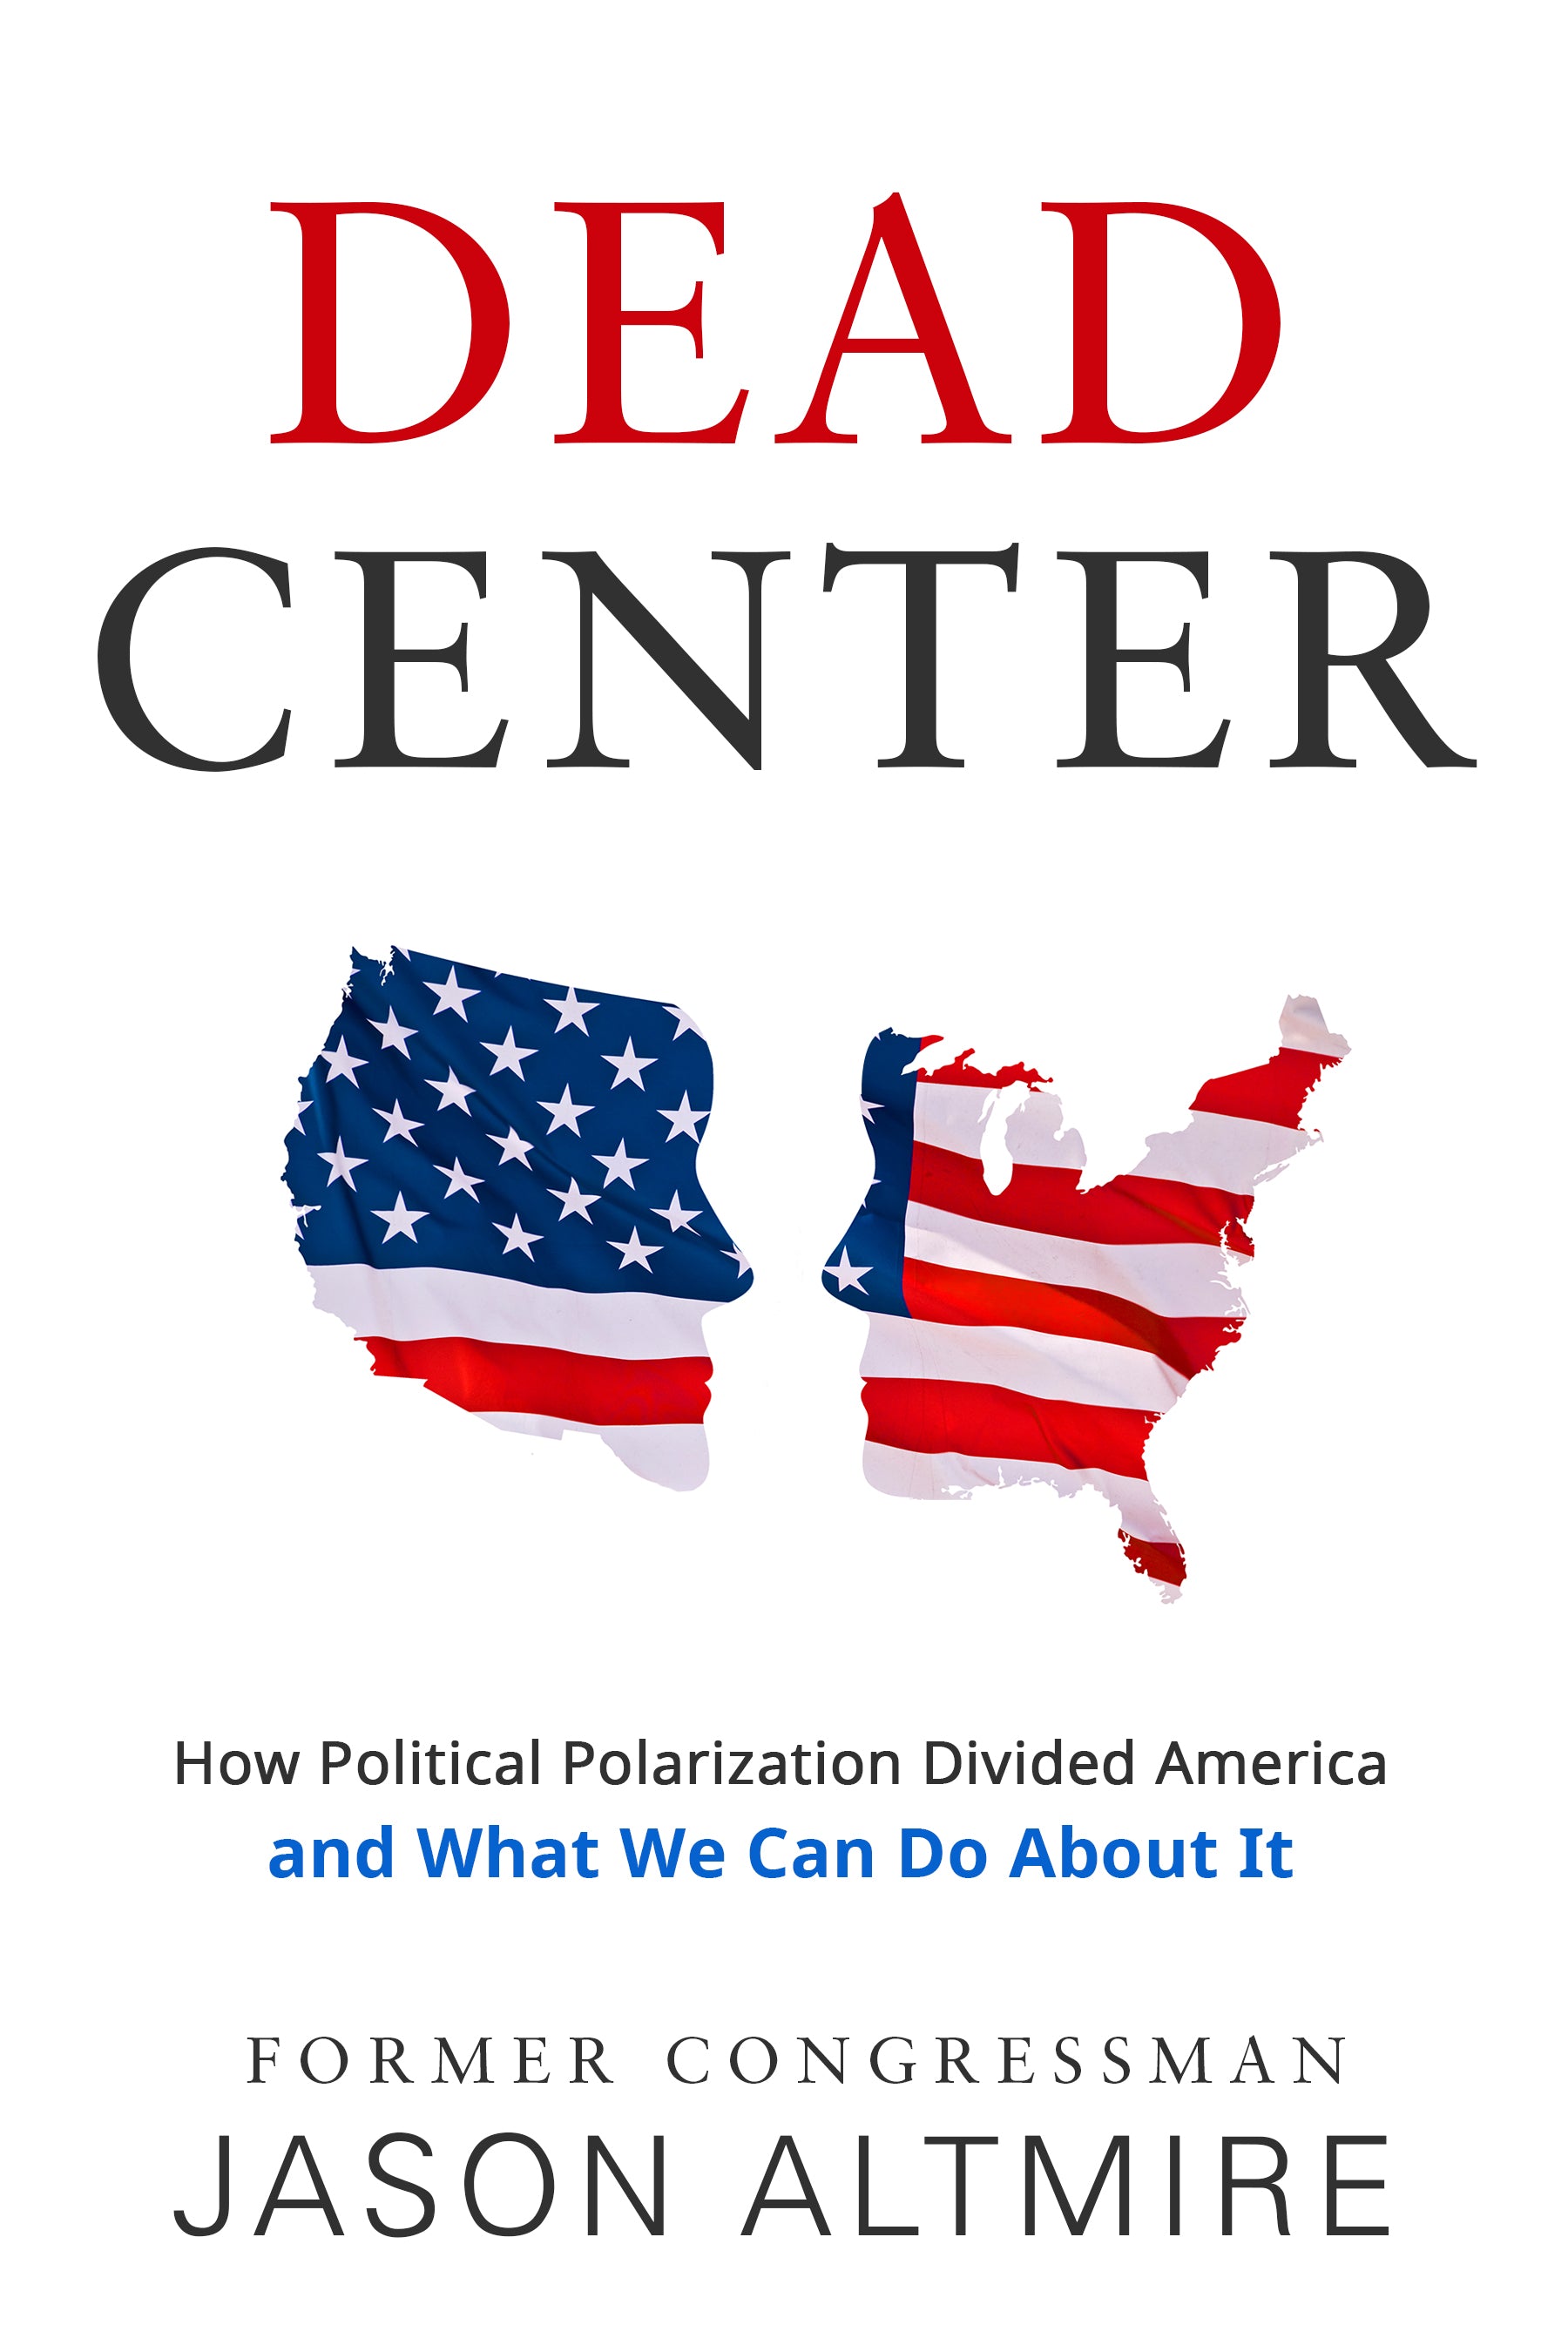 Former Congressman Jason Altmire's "Dead Center" is the Sunbury Press bestseller for August